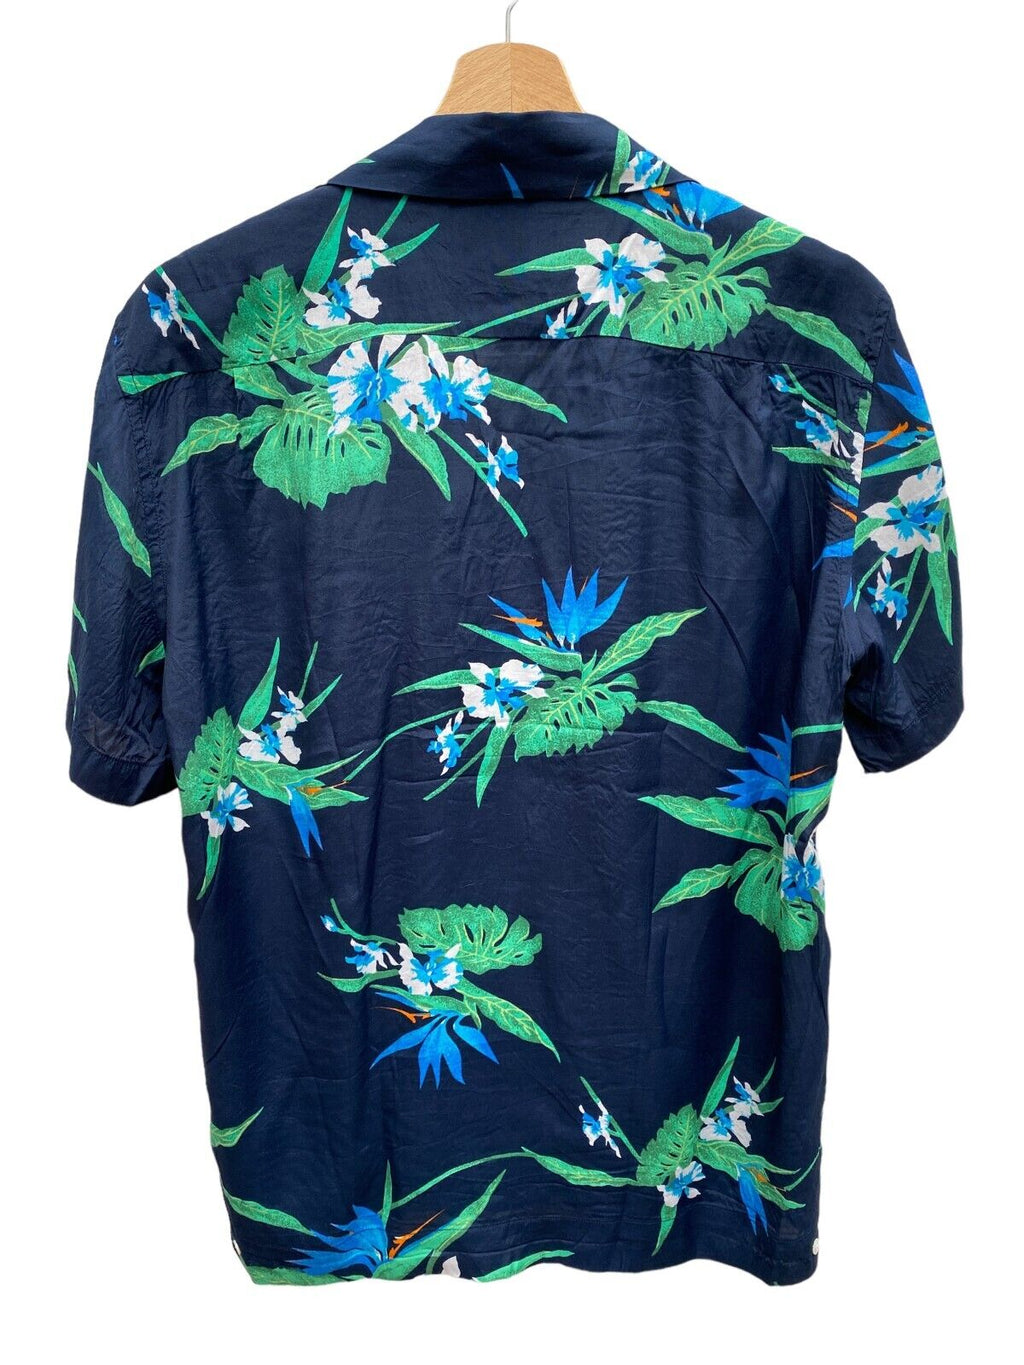 Sandro Paris Duke Navy Hawaiian Shirt Bowling Fit  Size L fits M